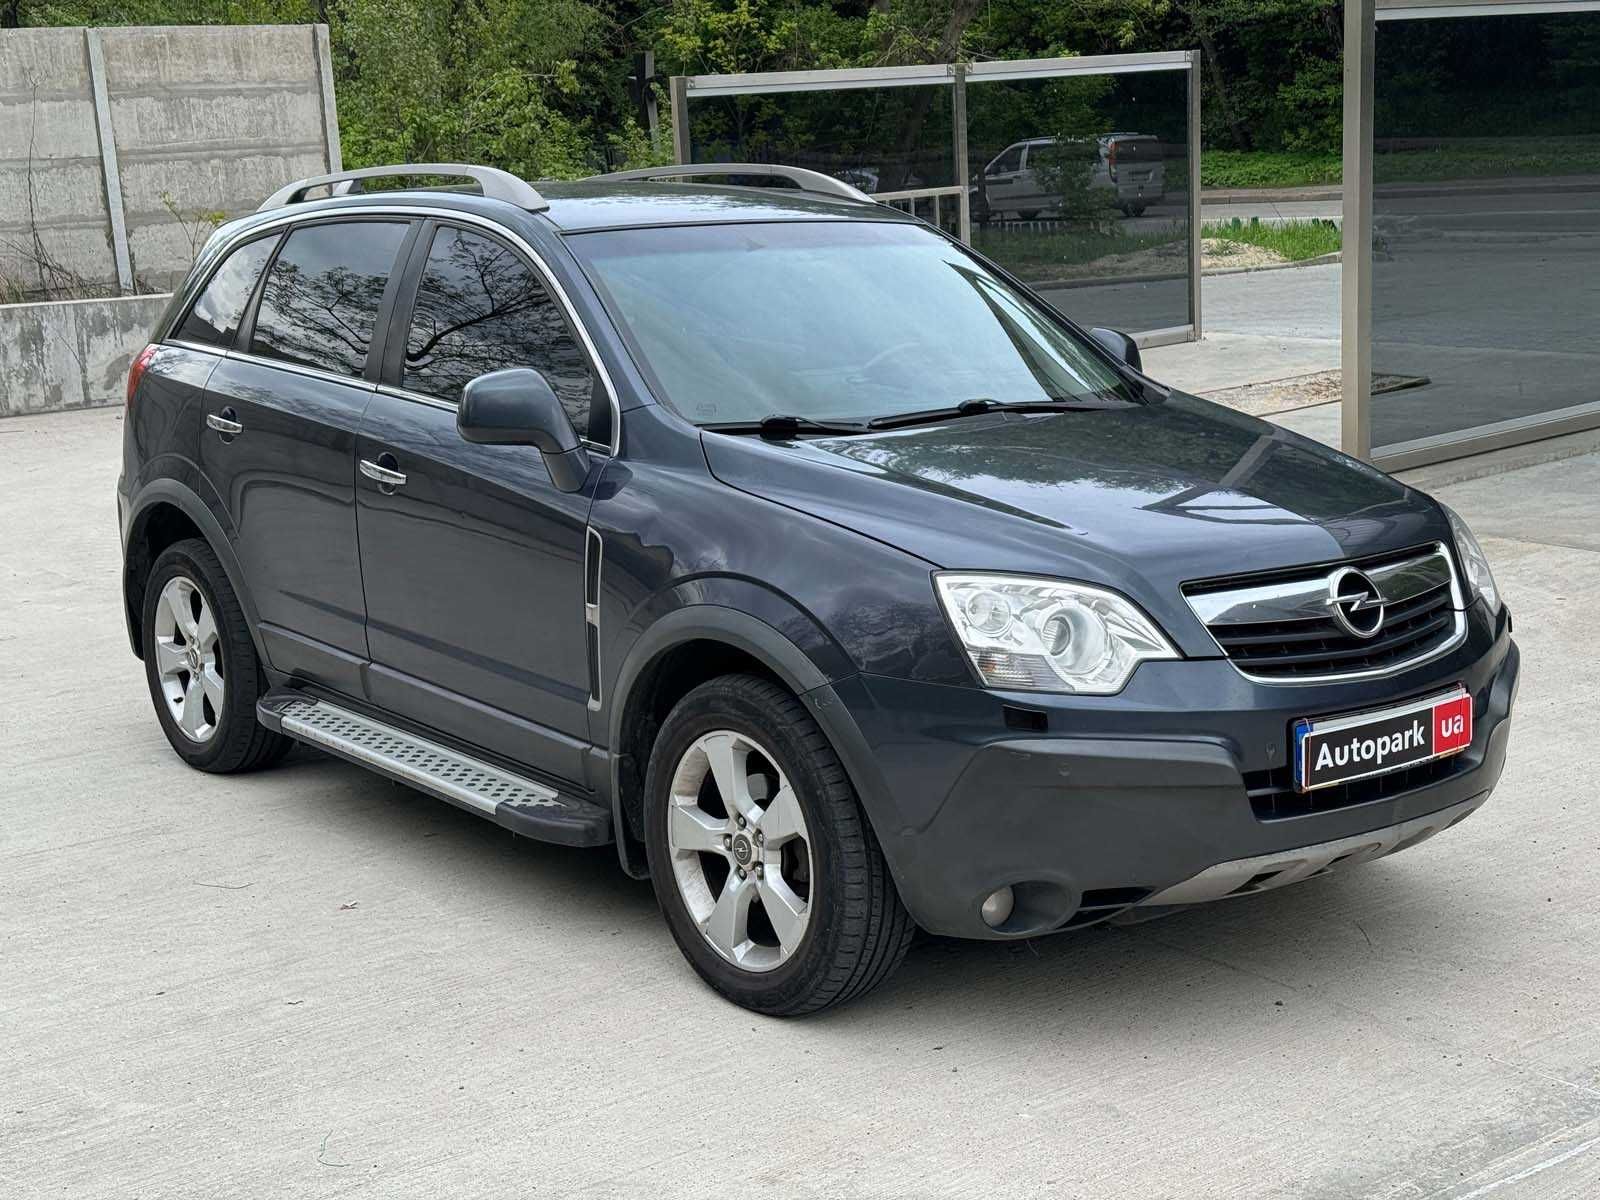 Продам Opel Antara 2007р. #43323